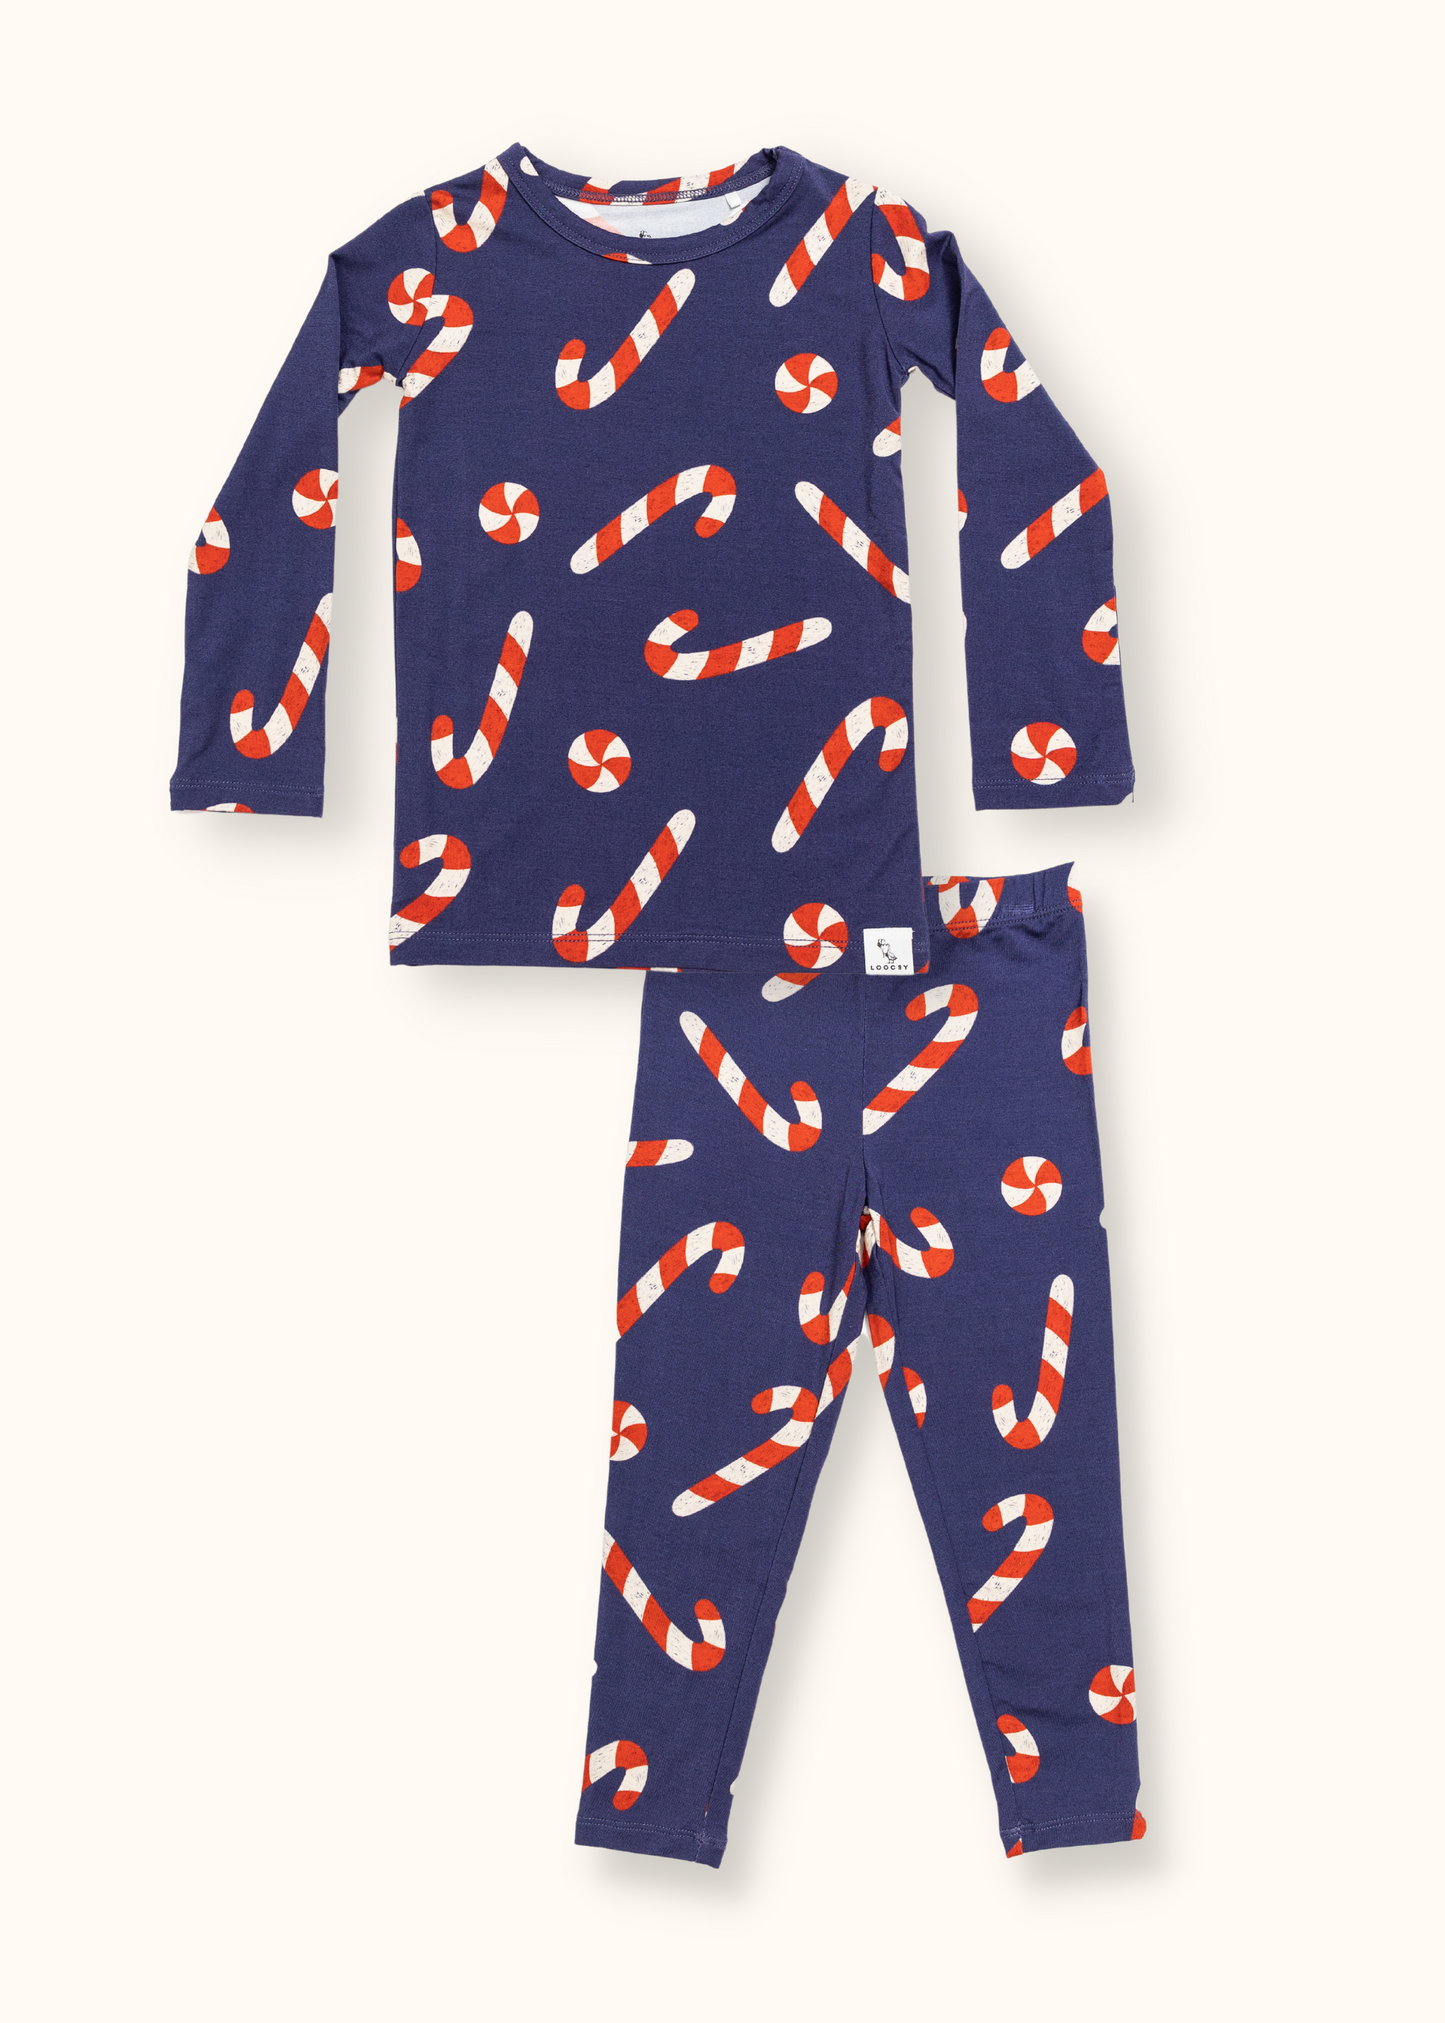 Navy Candy Cane Pajama Set by Loocsy